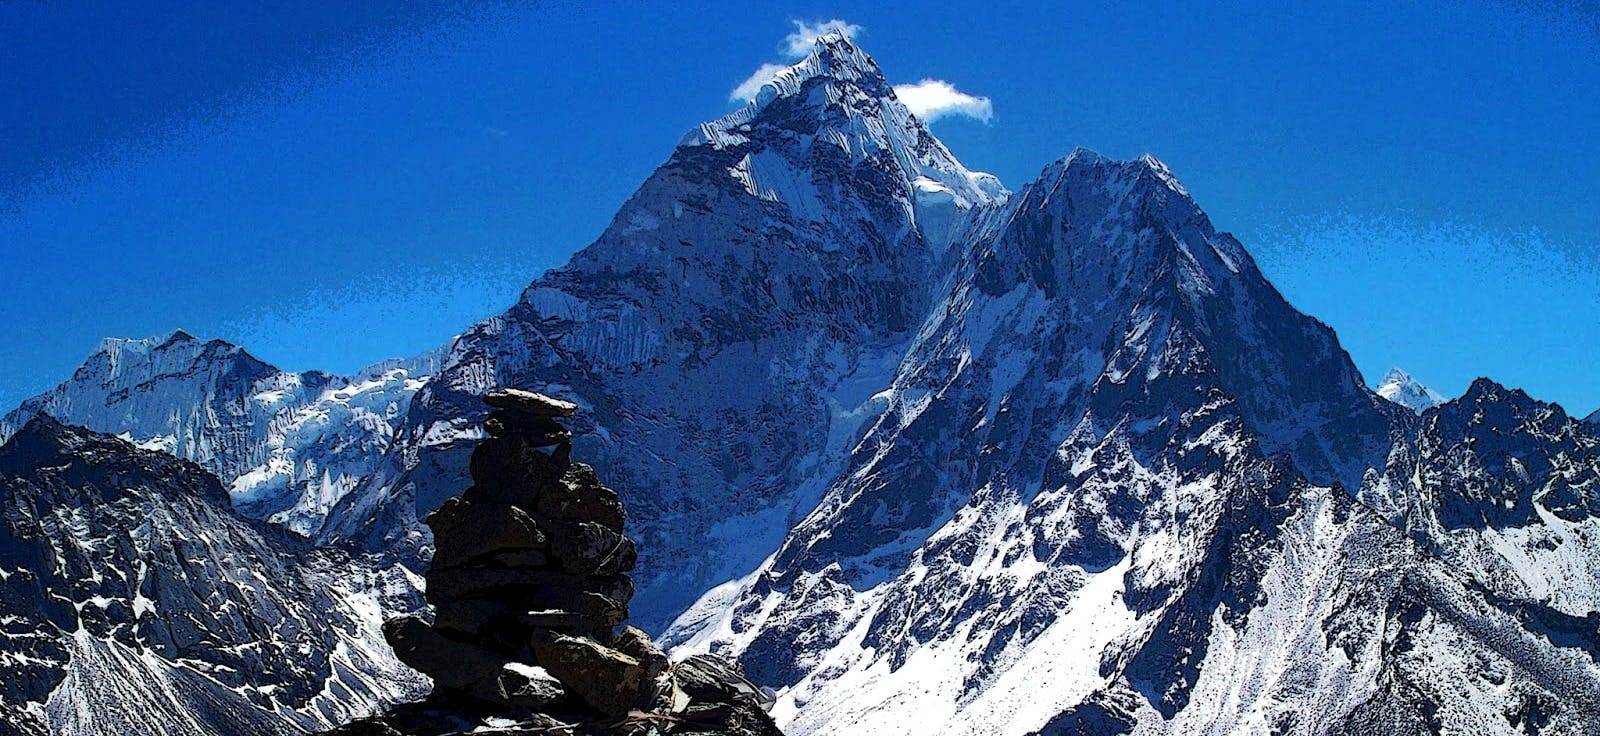 High-Altitude Health: Managing Risks on Nepal’s Peaks